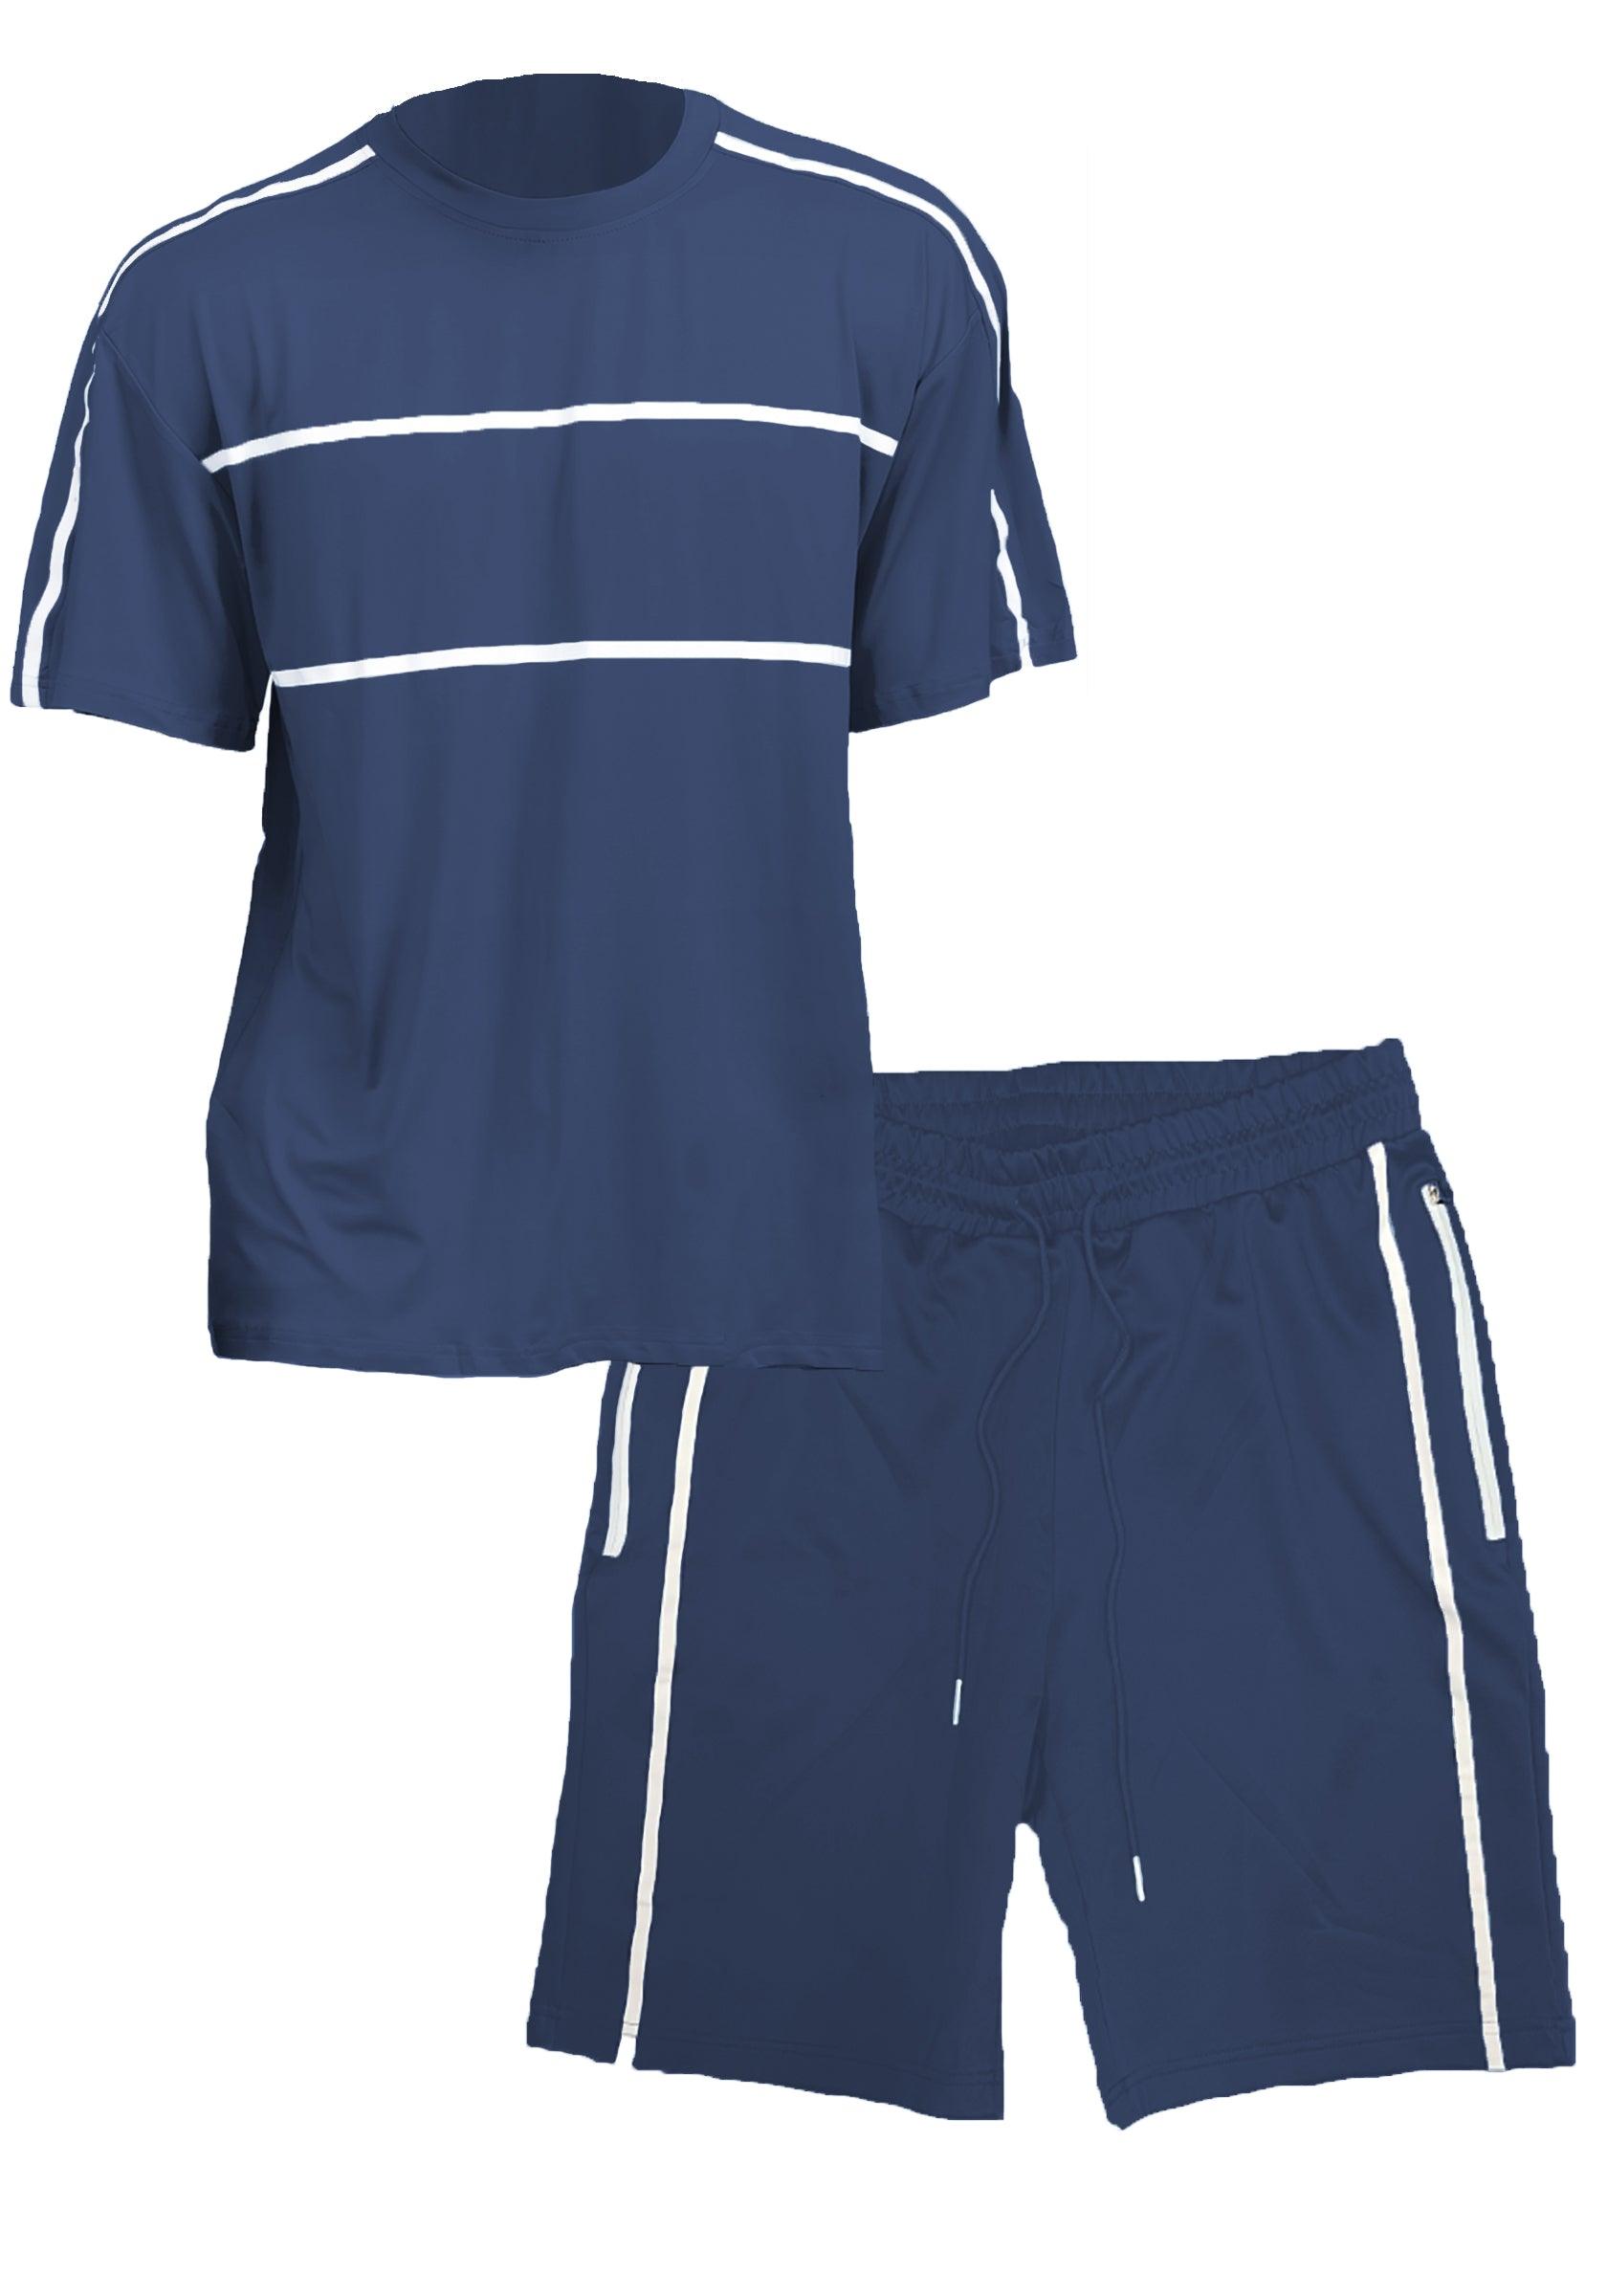 Men's Activewear Navy Blue Jordan Tshirt Short Set